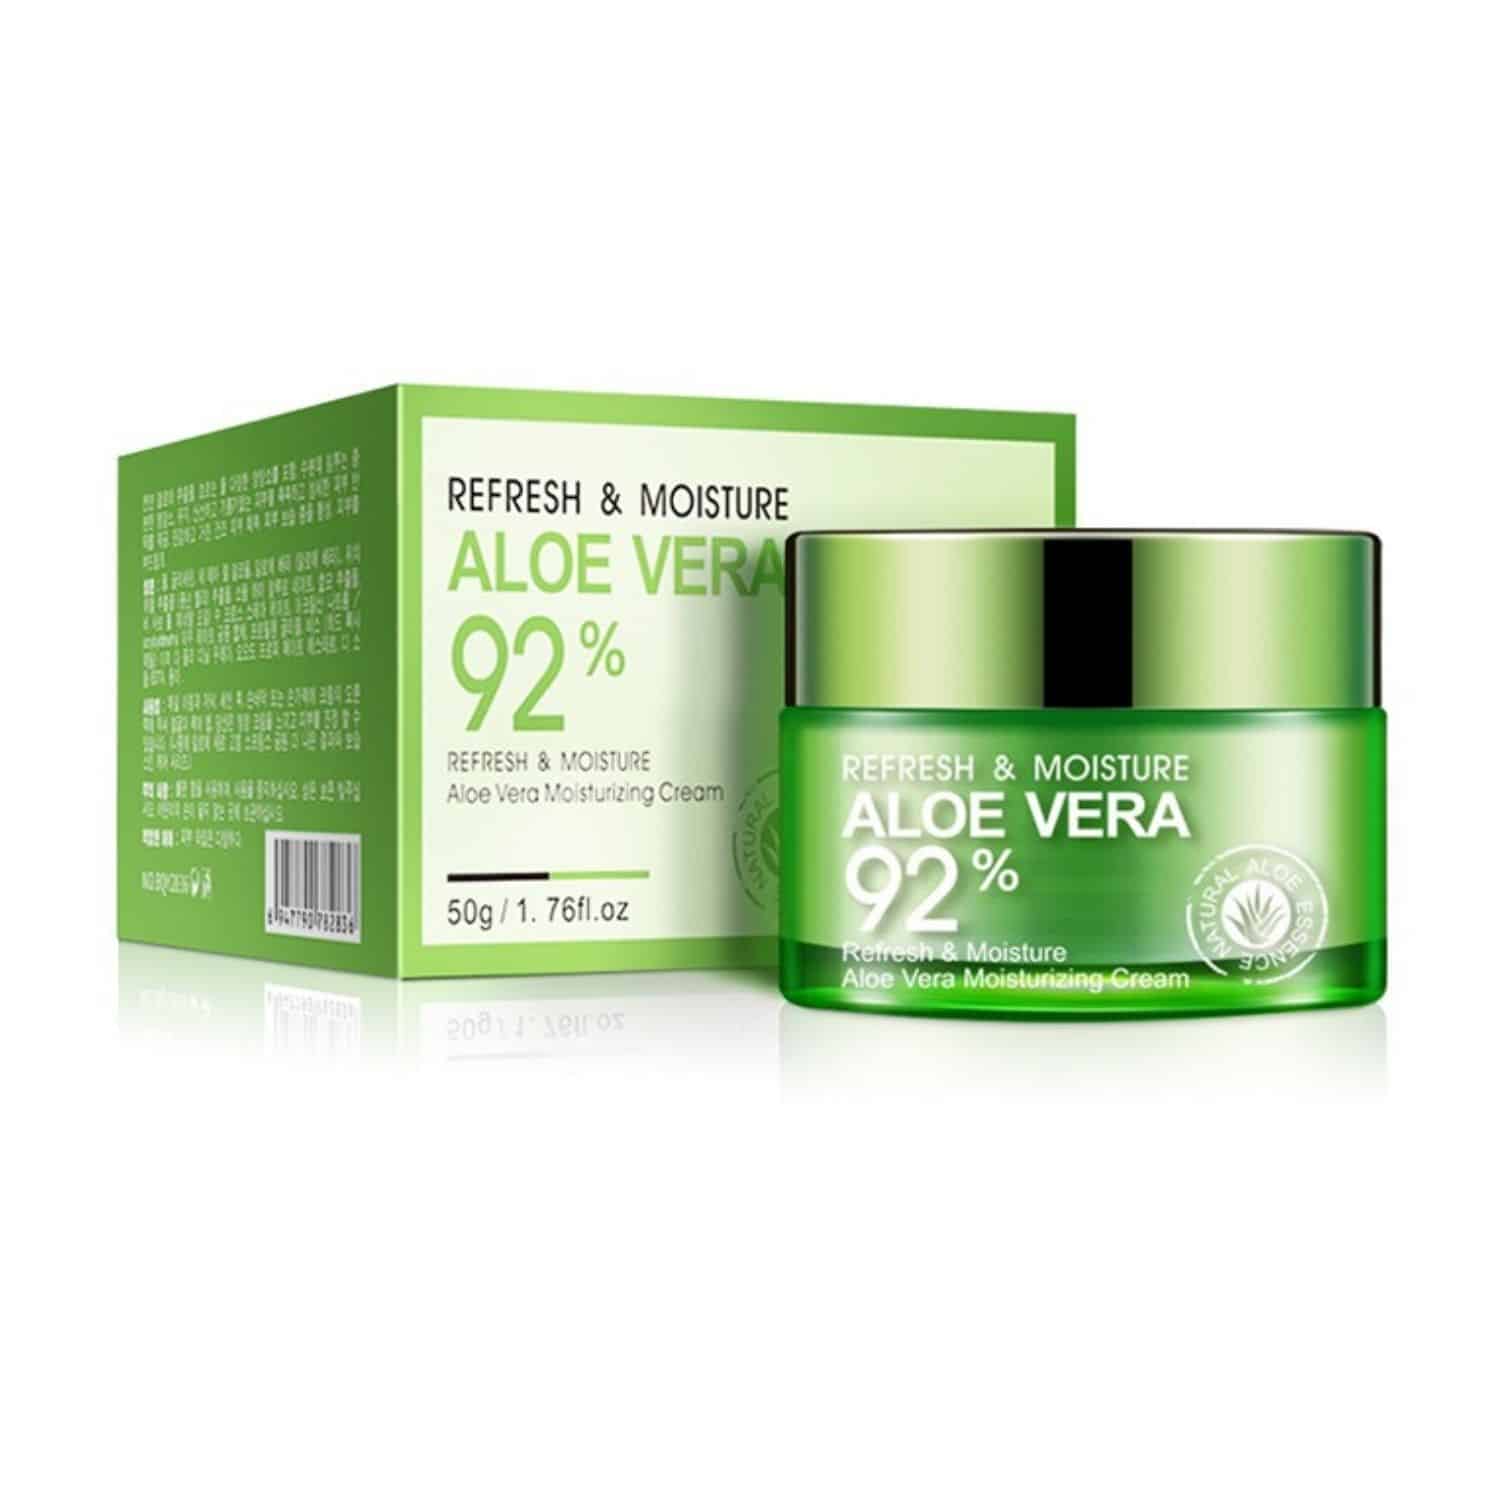 BIOAQUA Aloe Vera Face Cream - Moisturize and Nourish Your Skin ...